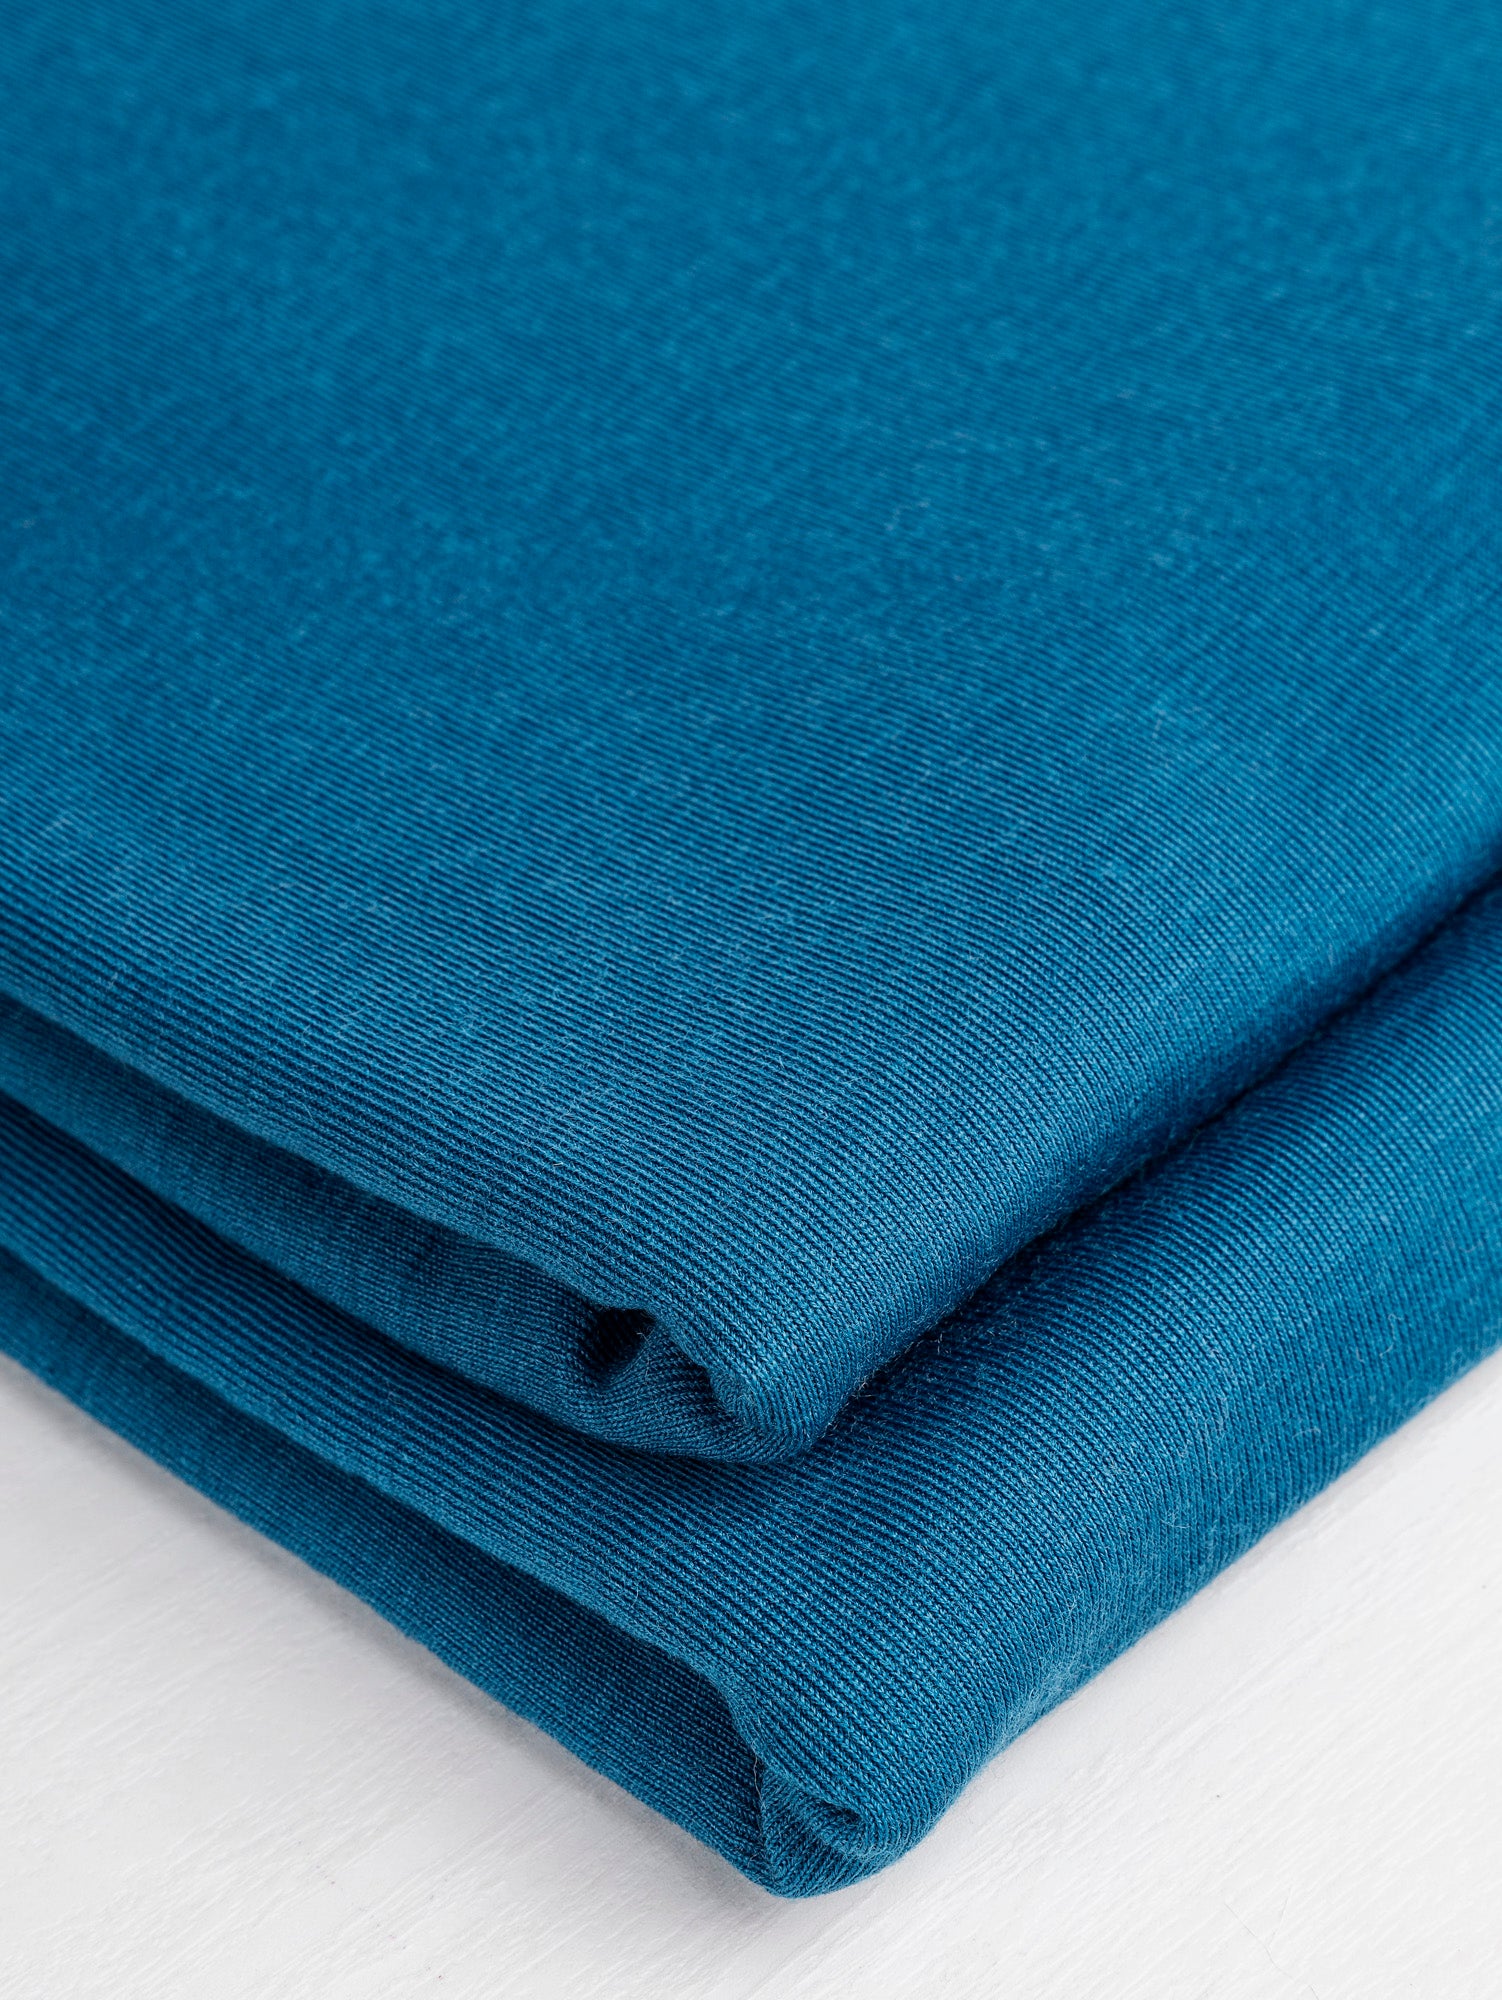 Blue Wool Ribbed Jersey Knit Fabric: 100% Wool Fabrics from Italy by  Marioboselli Jersey, SKU 00057237 at $113 — Buy Wool Fabrics Online